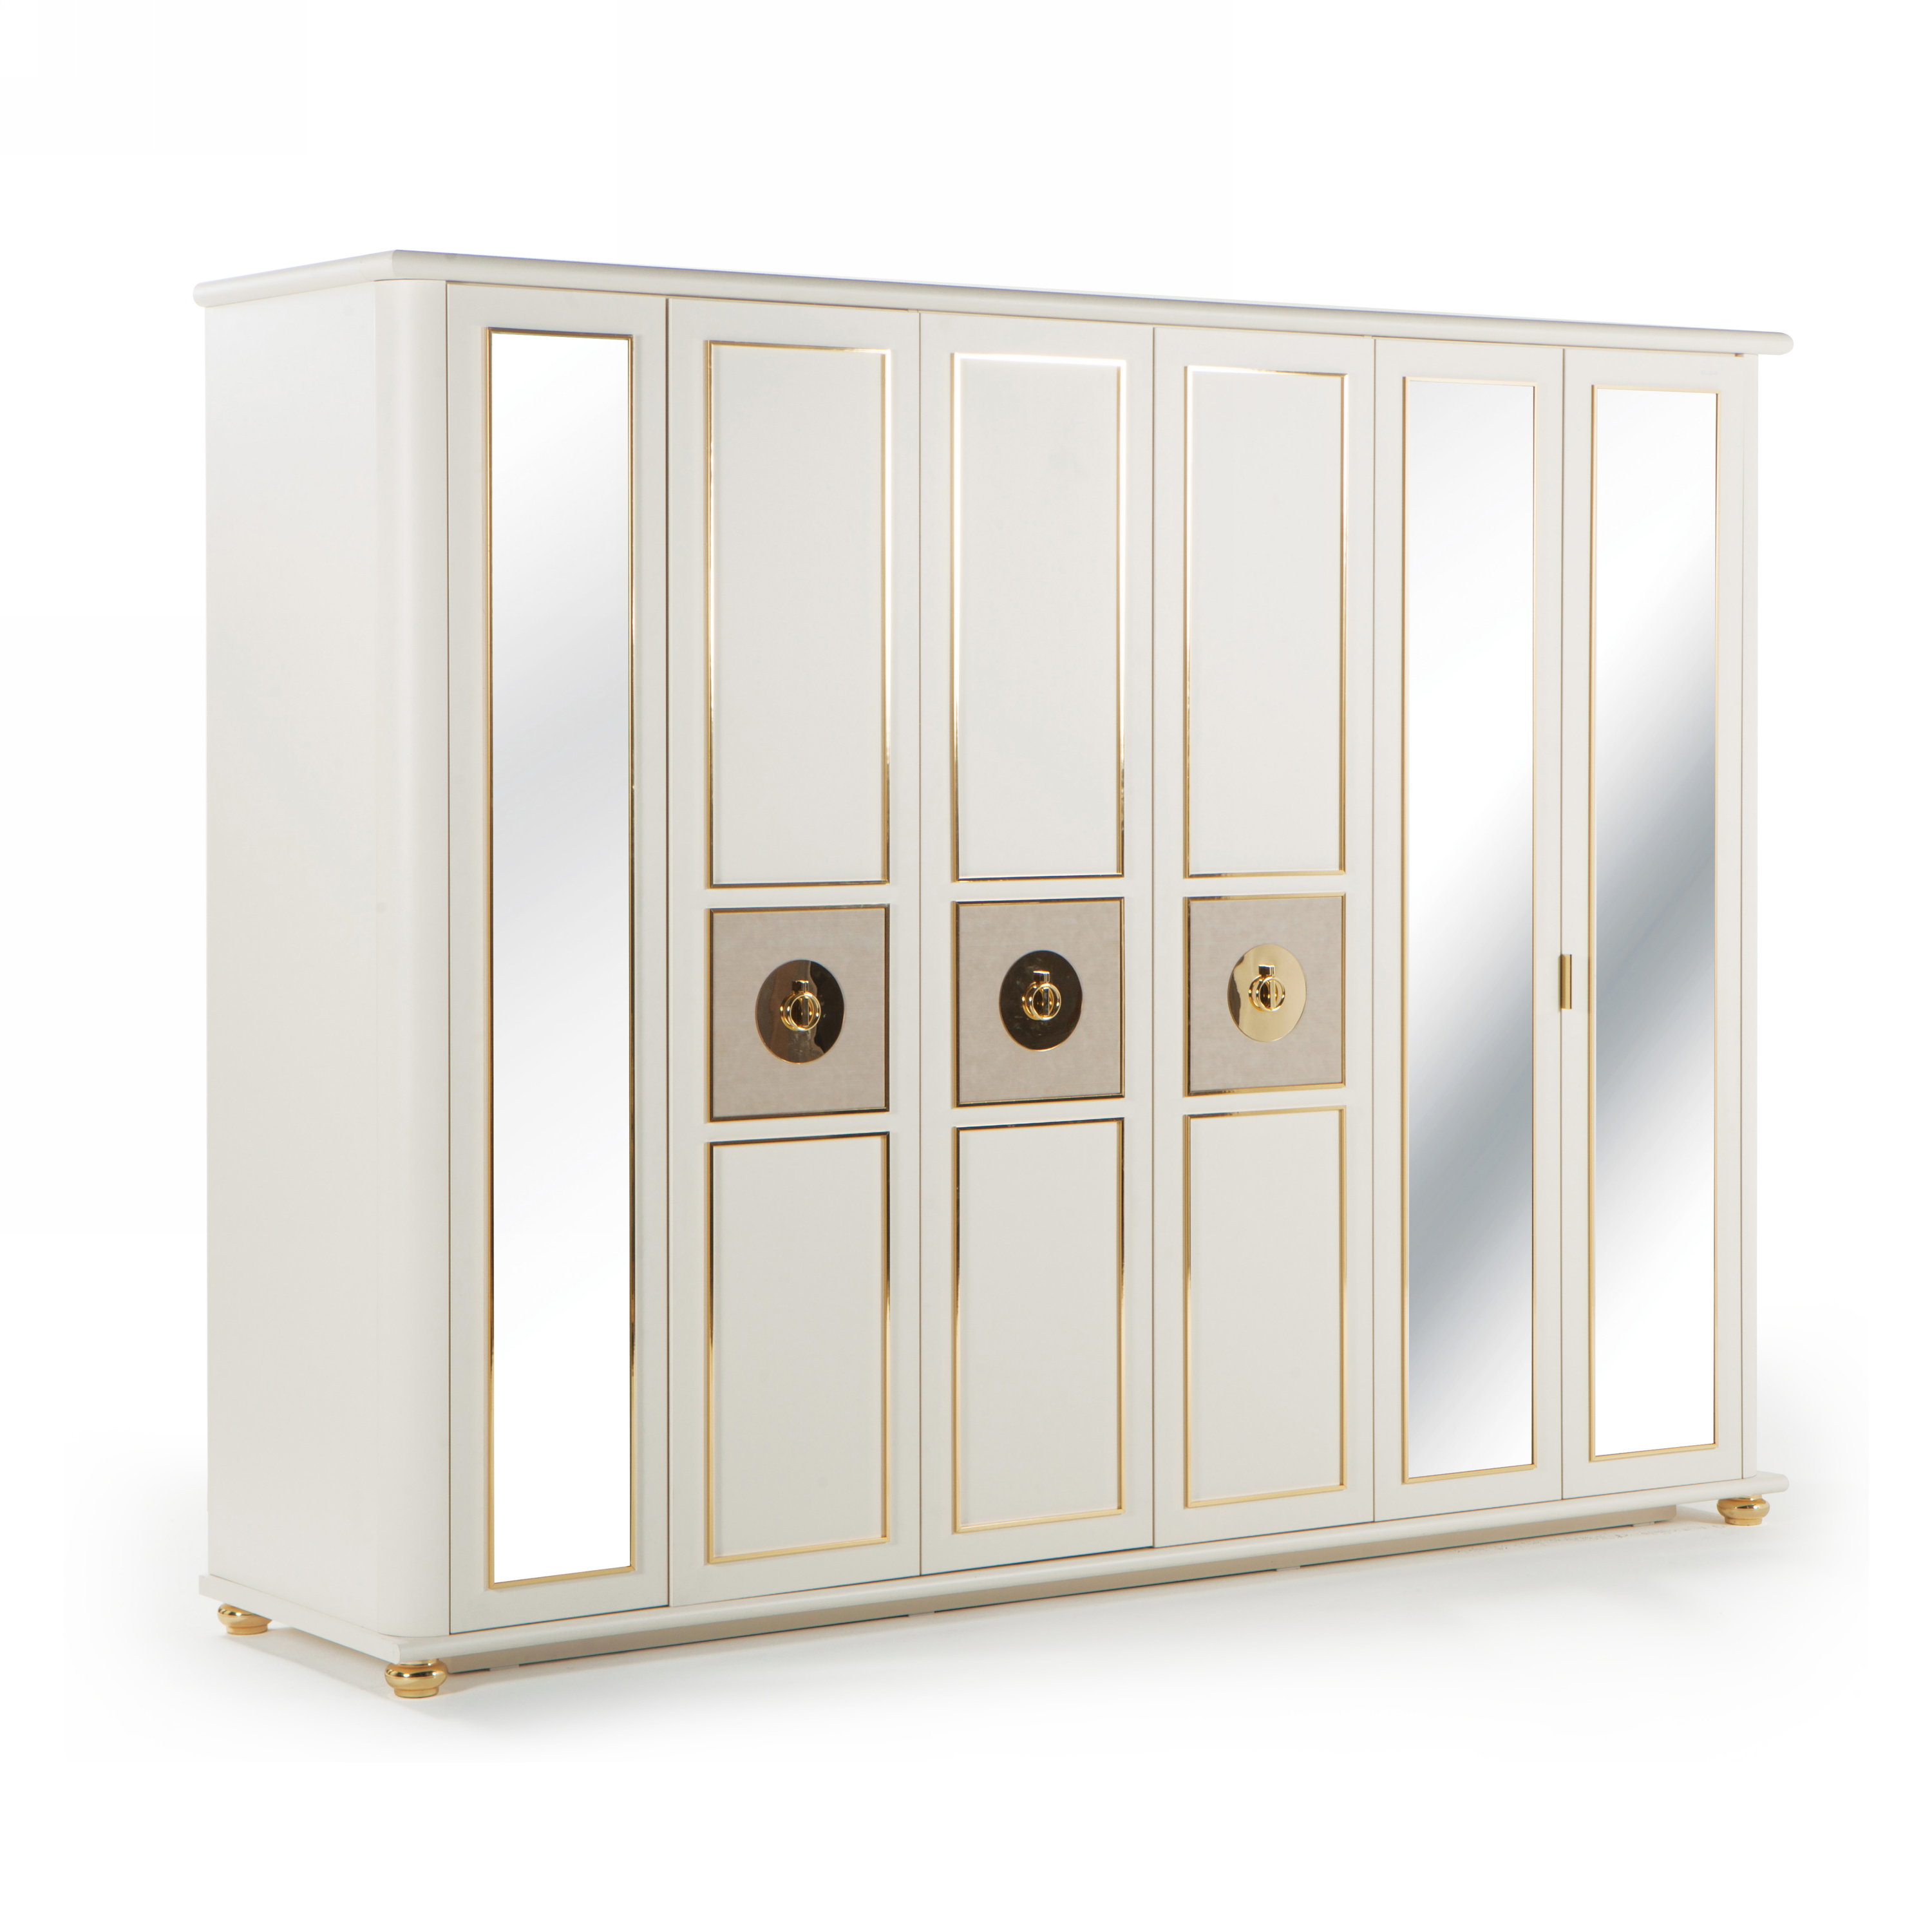 Шкаф платяной Bellona Mistral, 6-ти дверный, размер 274х68х210 см (MIST-34)MIST-34